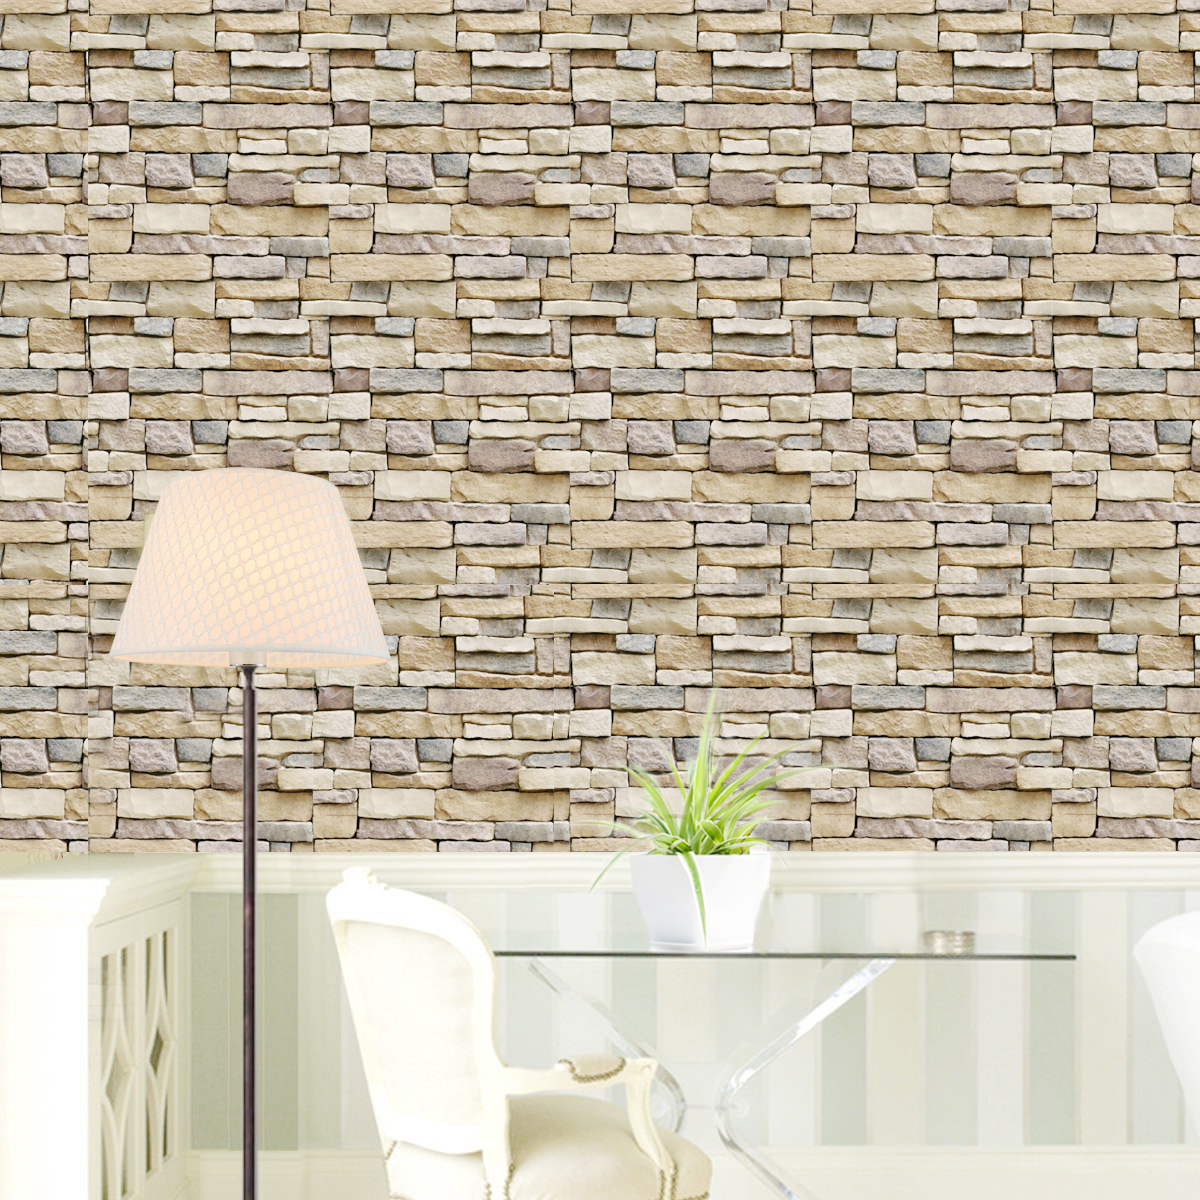 3D-Wall-Paper-Brick-Stone-Pattern-Sticker-Rolls-Self-adhesive-Backdrop-DIY-Room-Decor-1373594-2